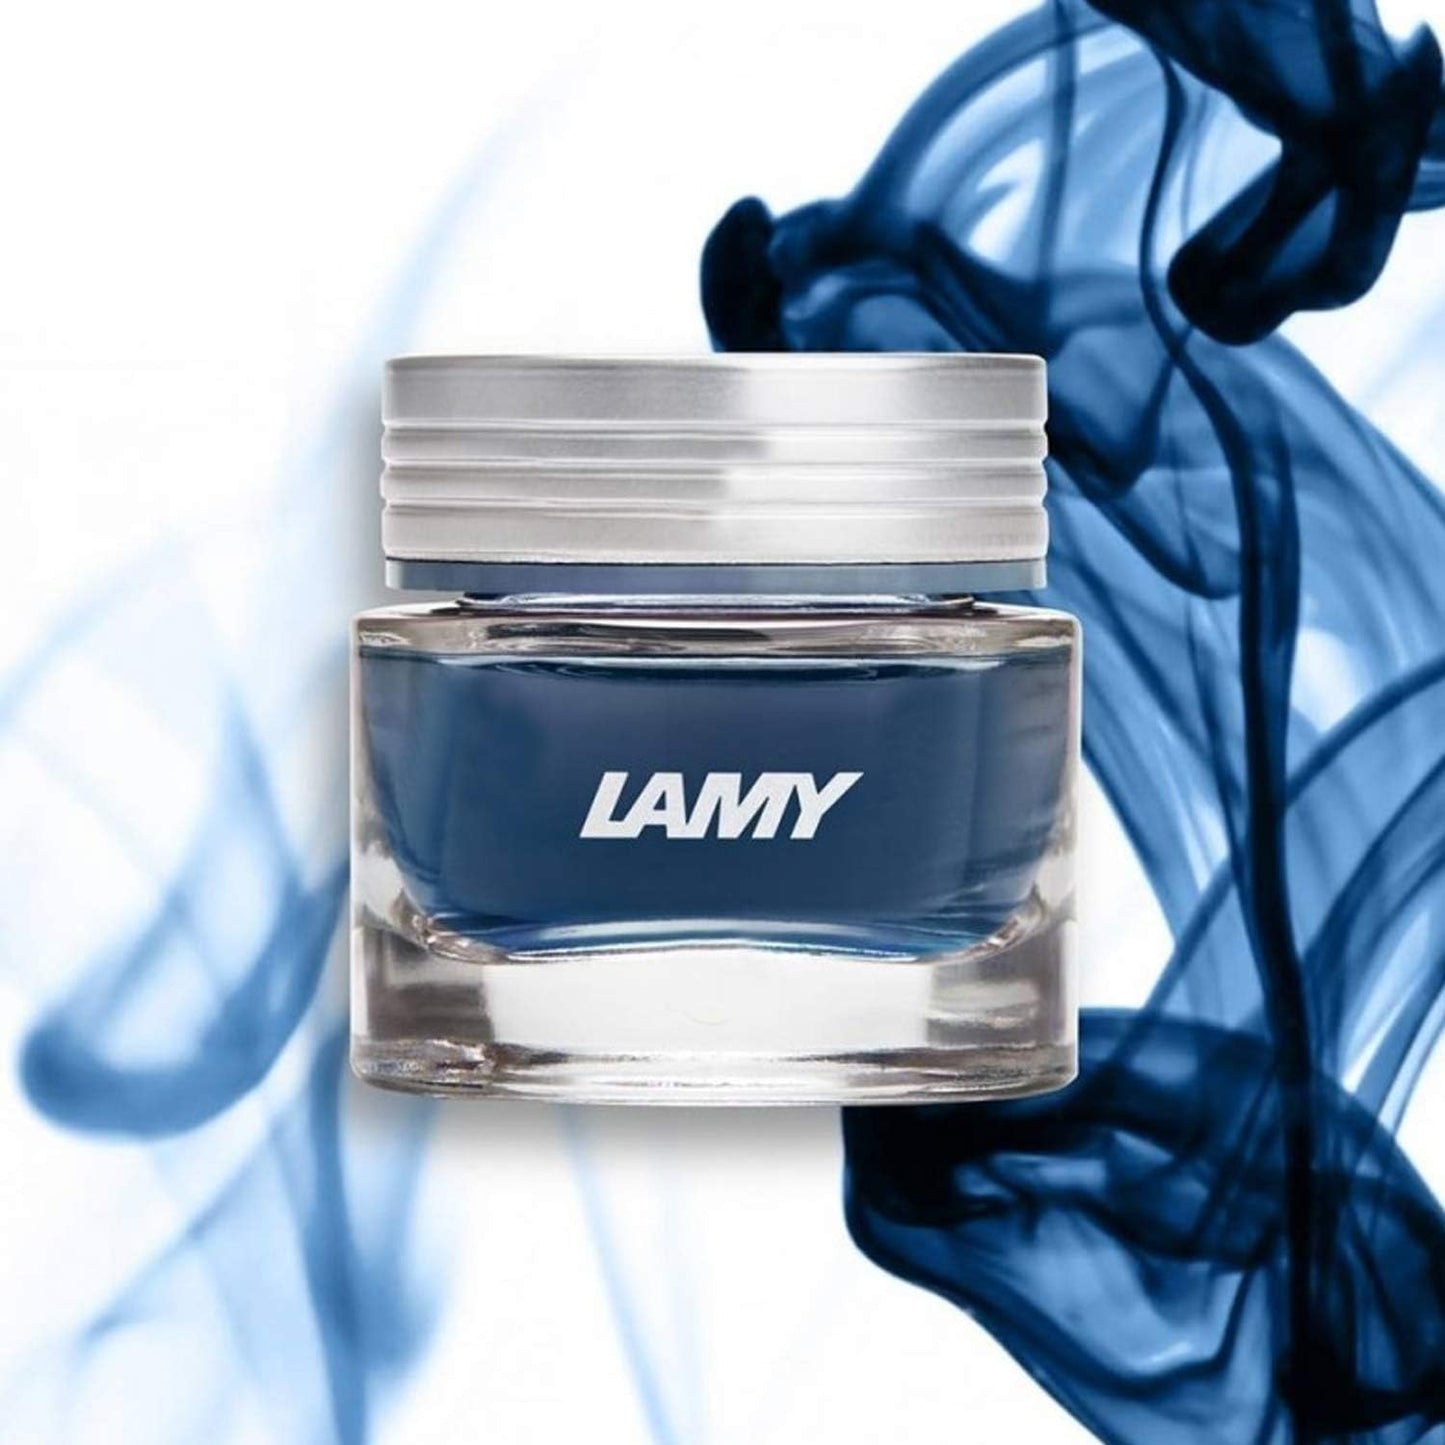 Lamy T53 380 30 ml Fountain Pen Blue Ink - Pack Of 1